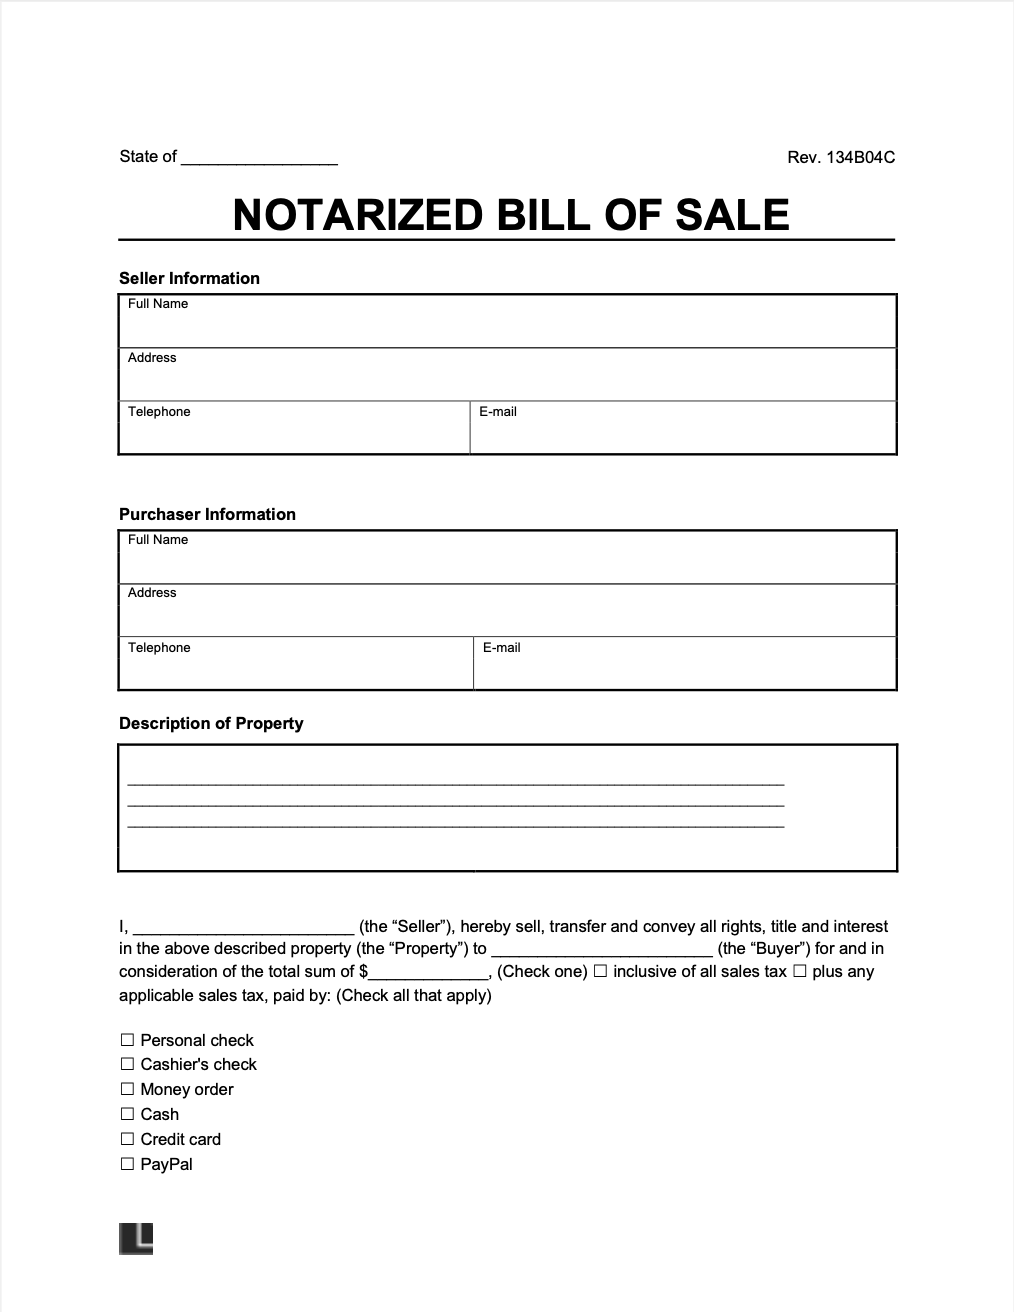 Notarized Bill of Sale screenshot